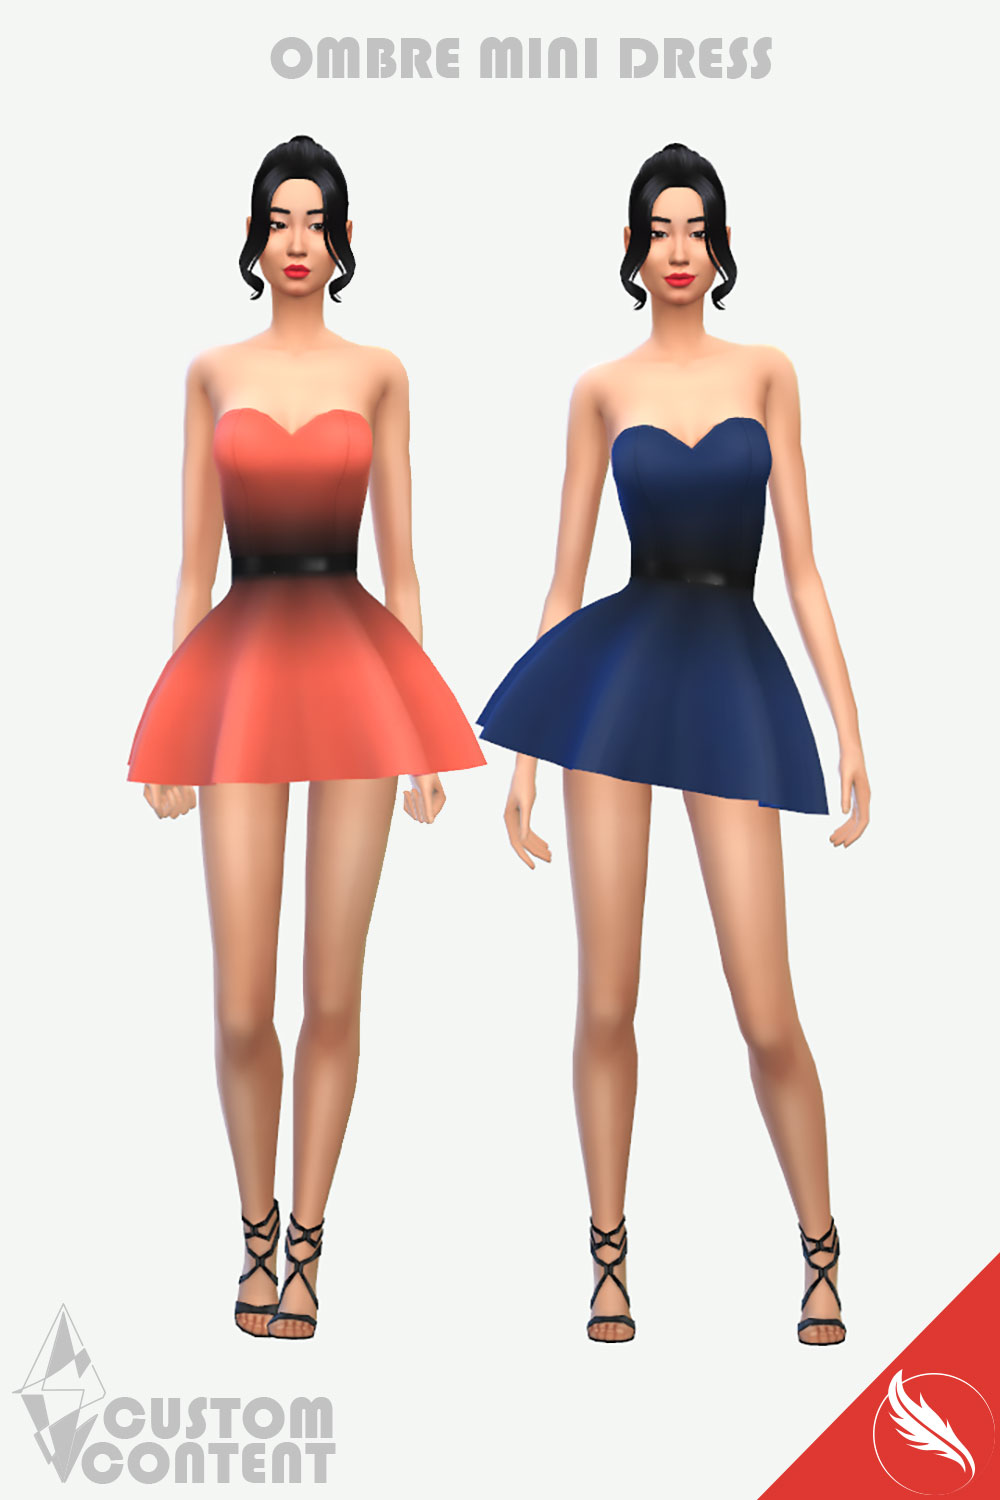 The Sims 4 Ombre Mini Dress